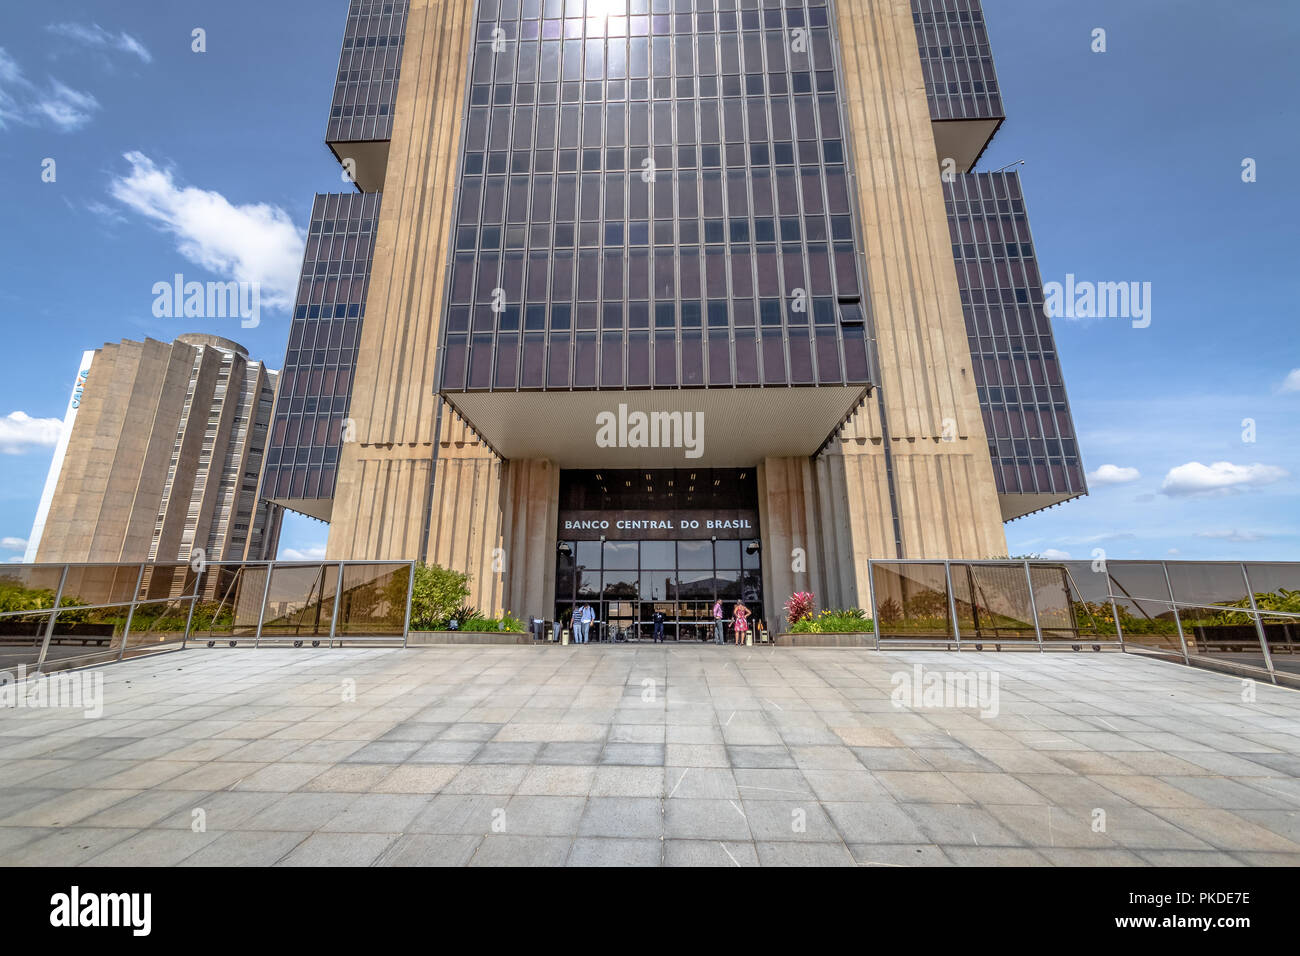 Central Bank of Brazil headquarters building - Brasilia, Distrito Federal, Brazil Stock Photo